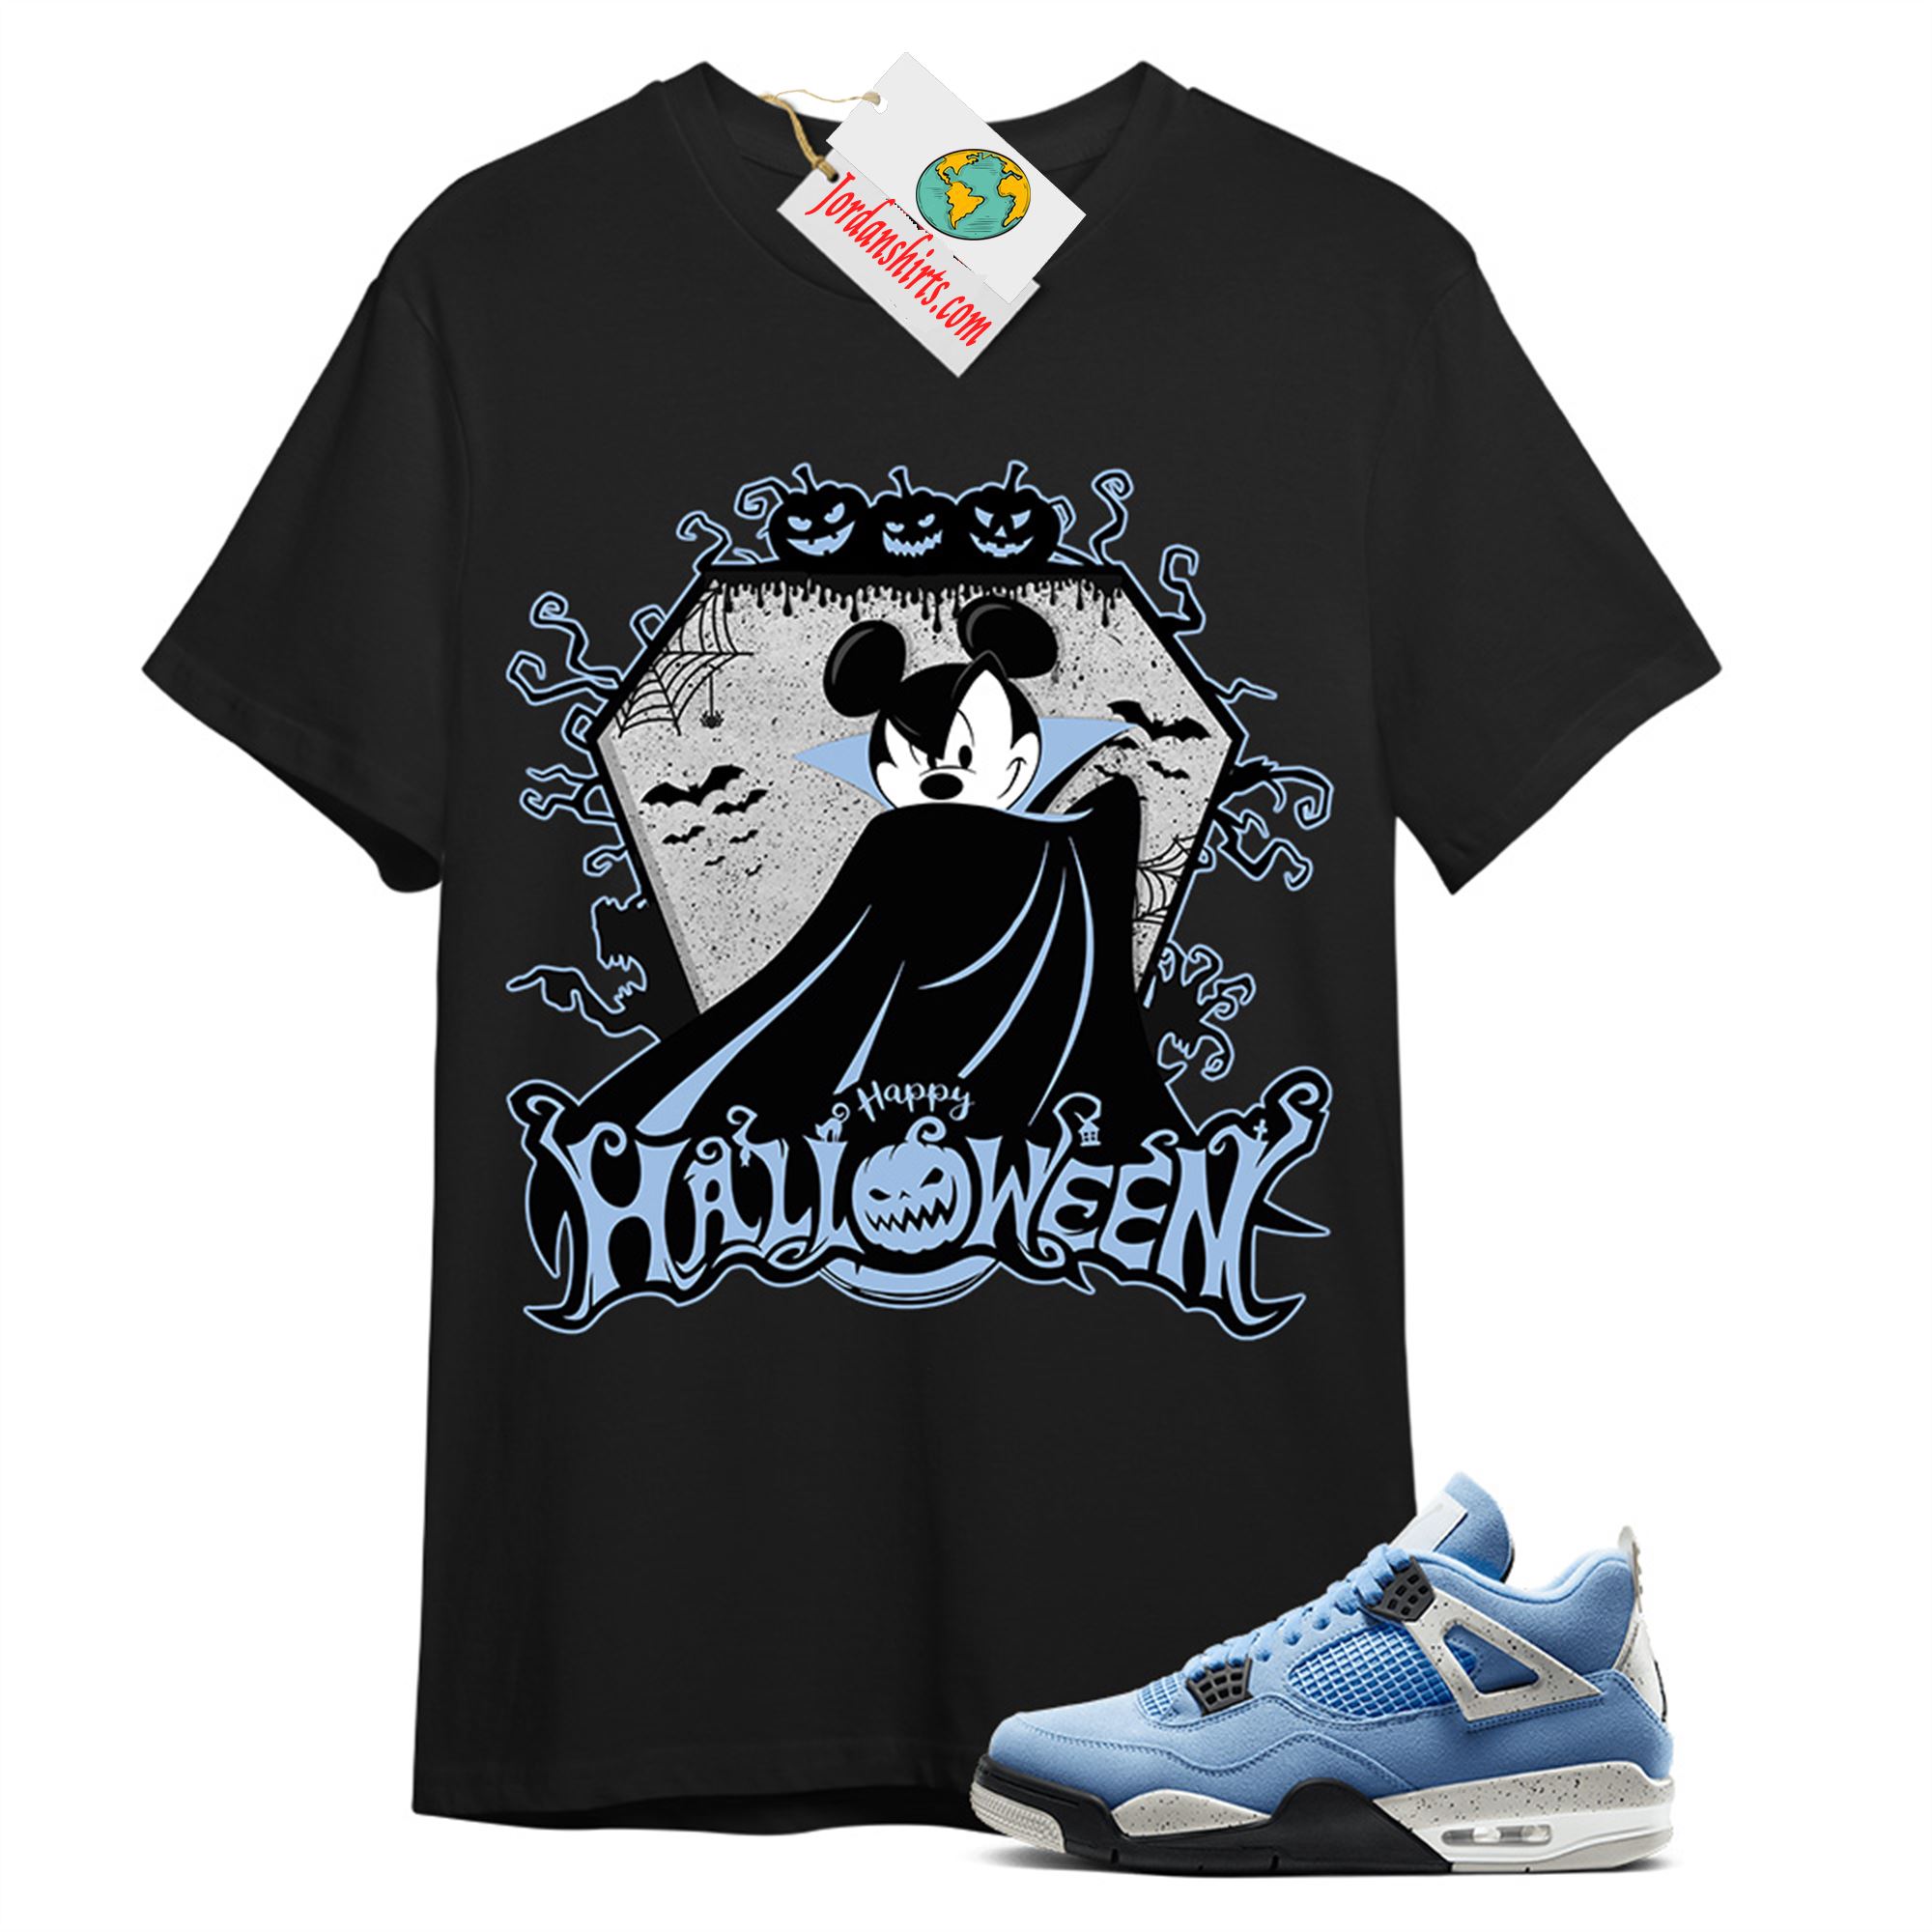 Jordan 4 Shirt, Dracula Mickey Black T-shirt Air Jordan 4 University Blue 4s Size Up To 5xl